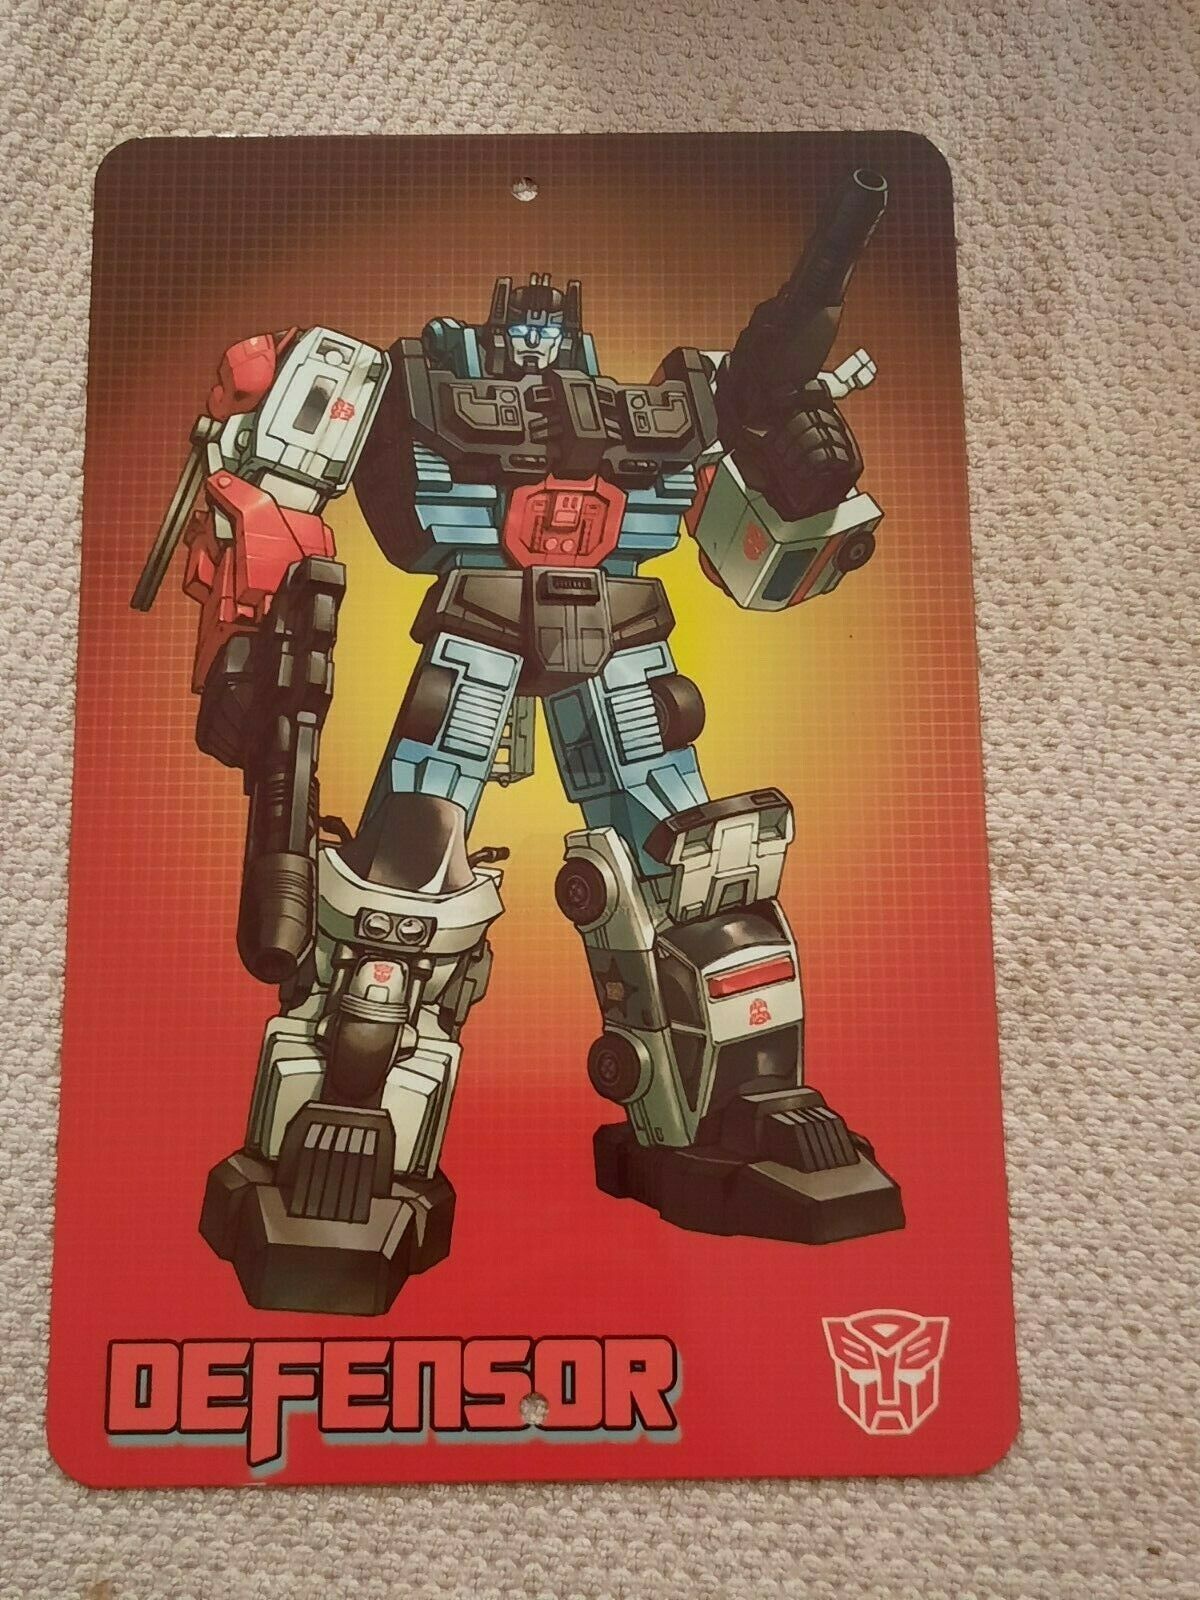 Transformers DEFENSOR Autobot 8x12 Metal Wall Sign